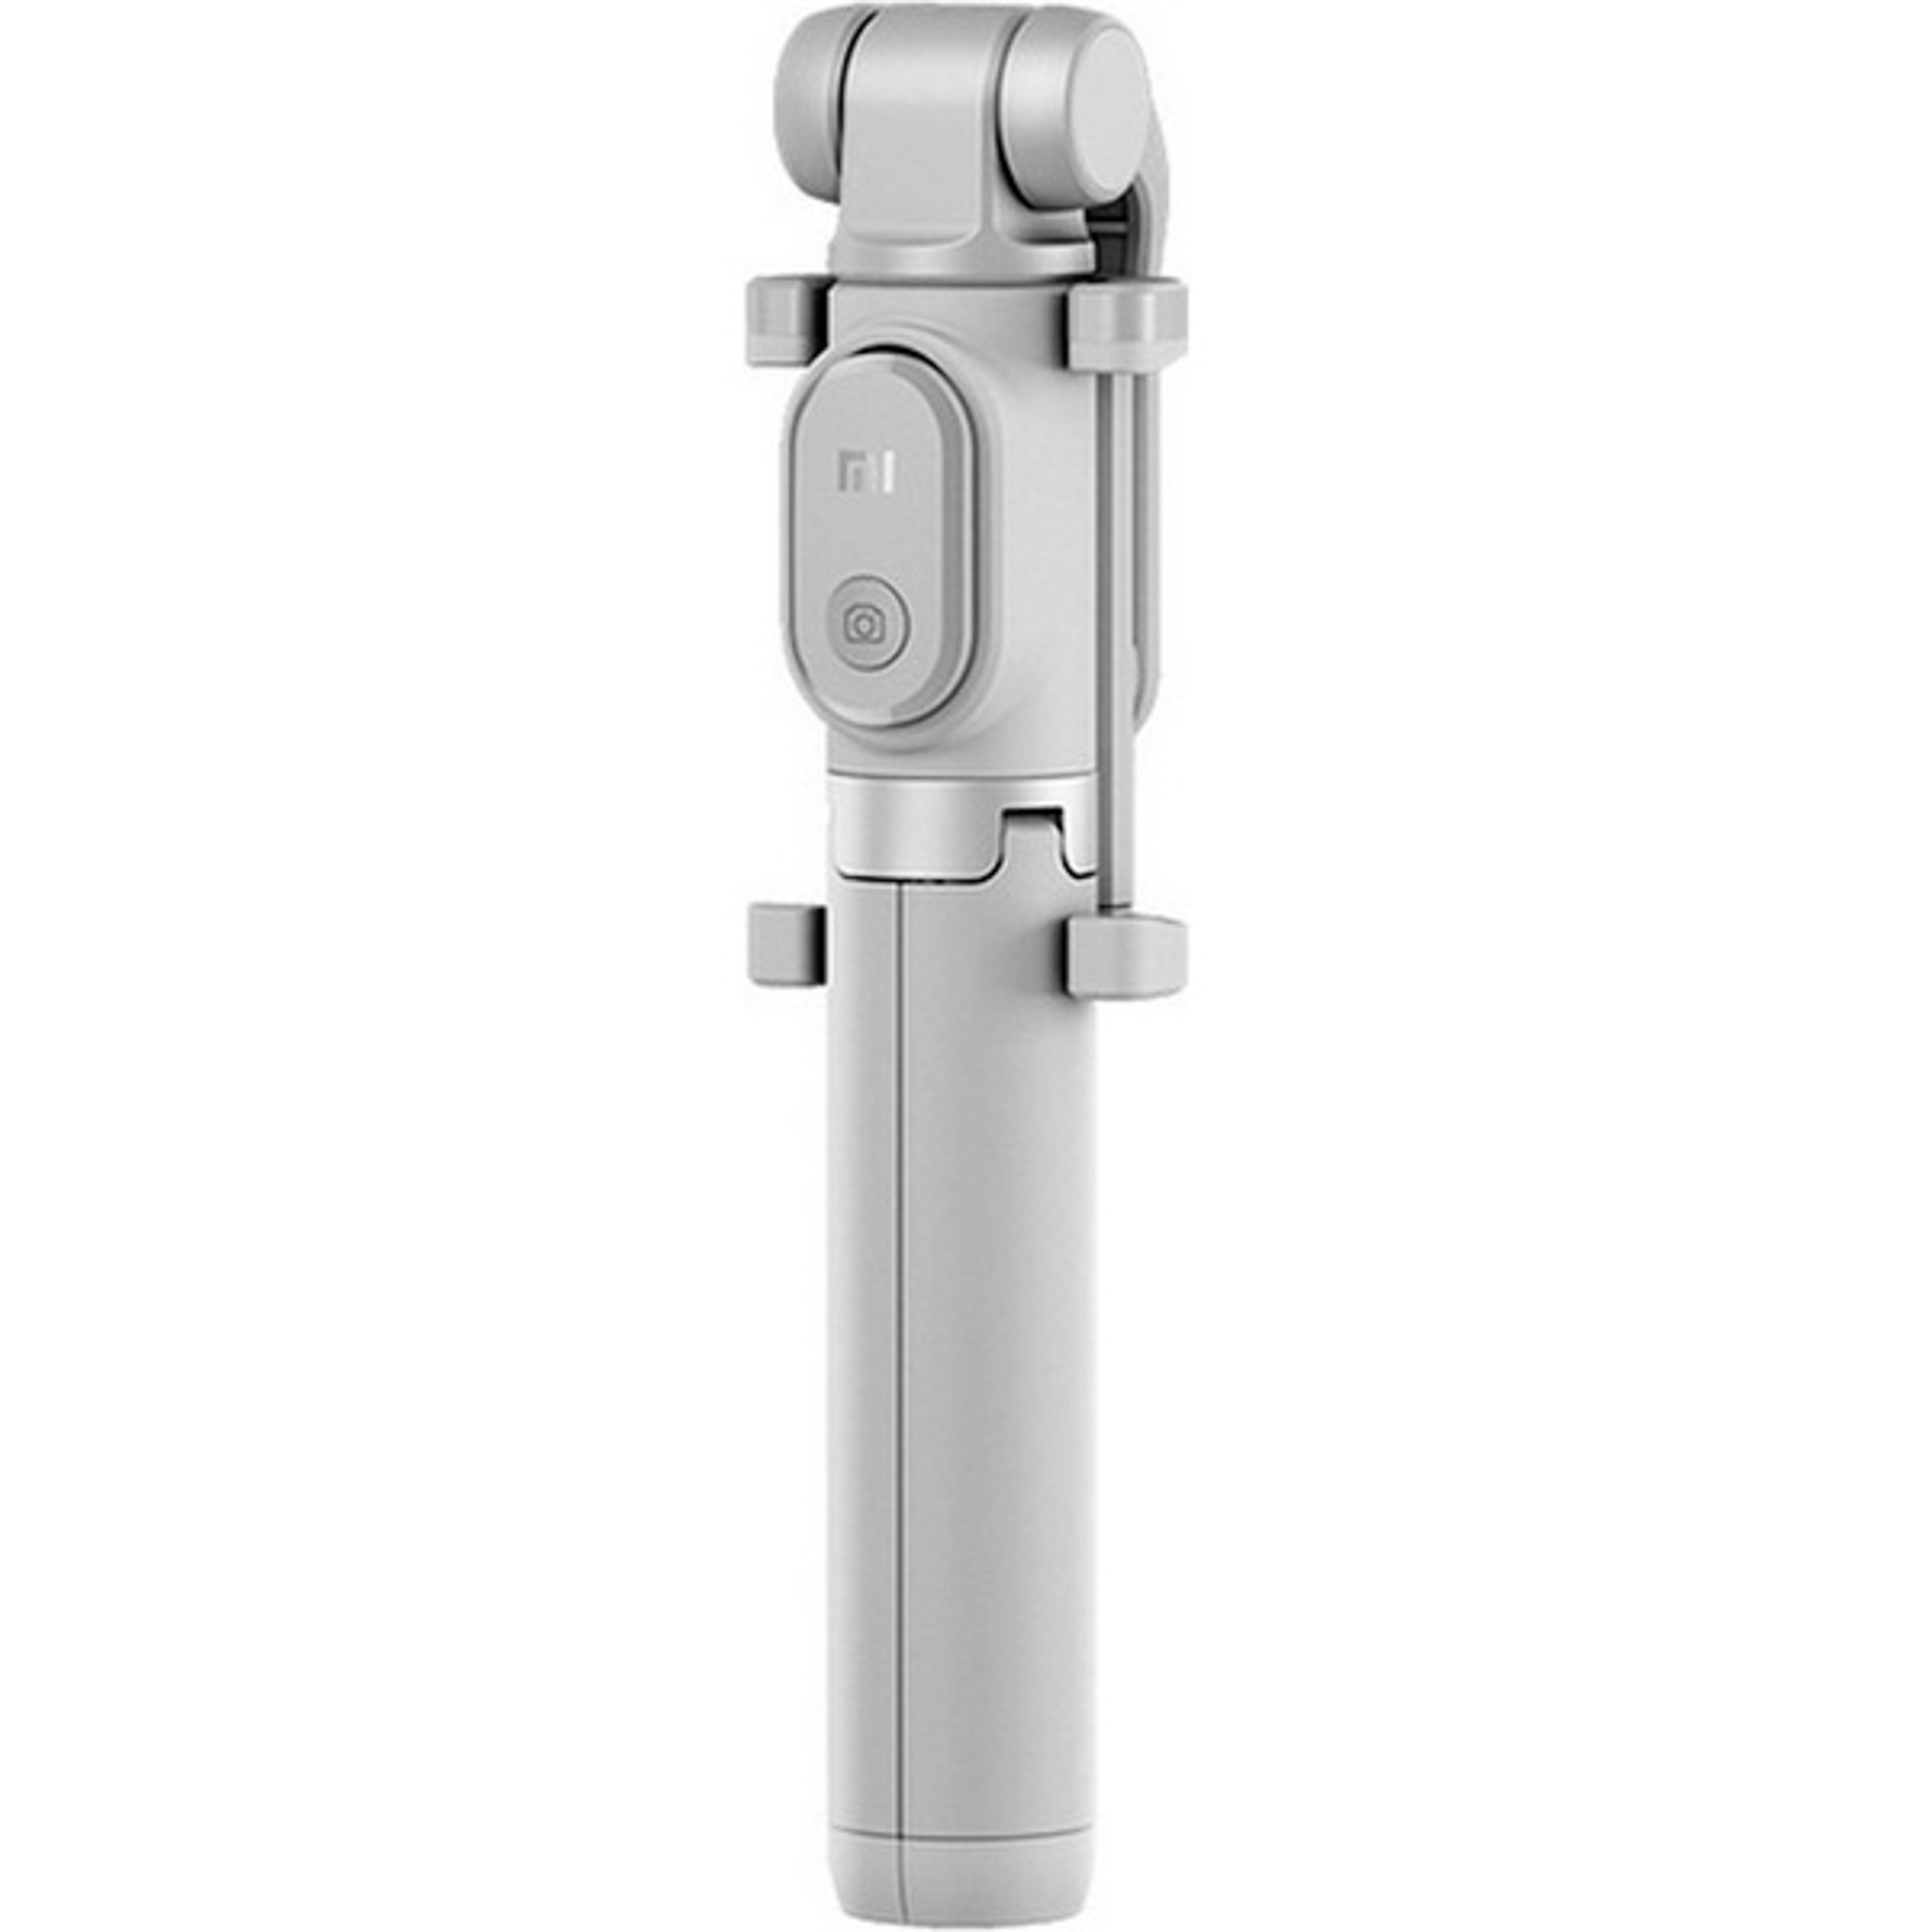 Монопод Xiaomi Mi Selfie Stick Tripod Grey, цвет серый XMZPG01YM - фото 2